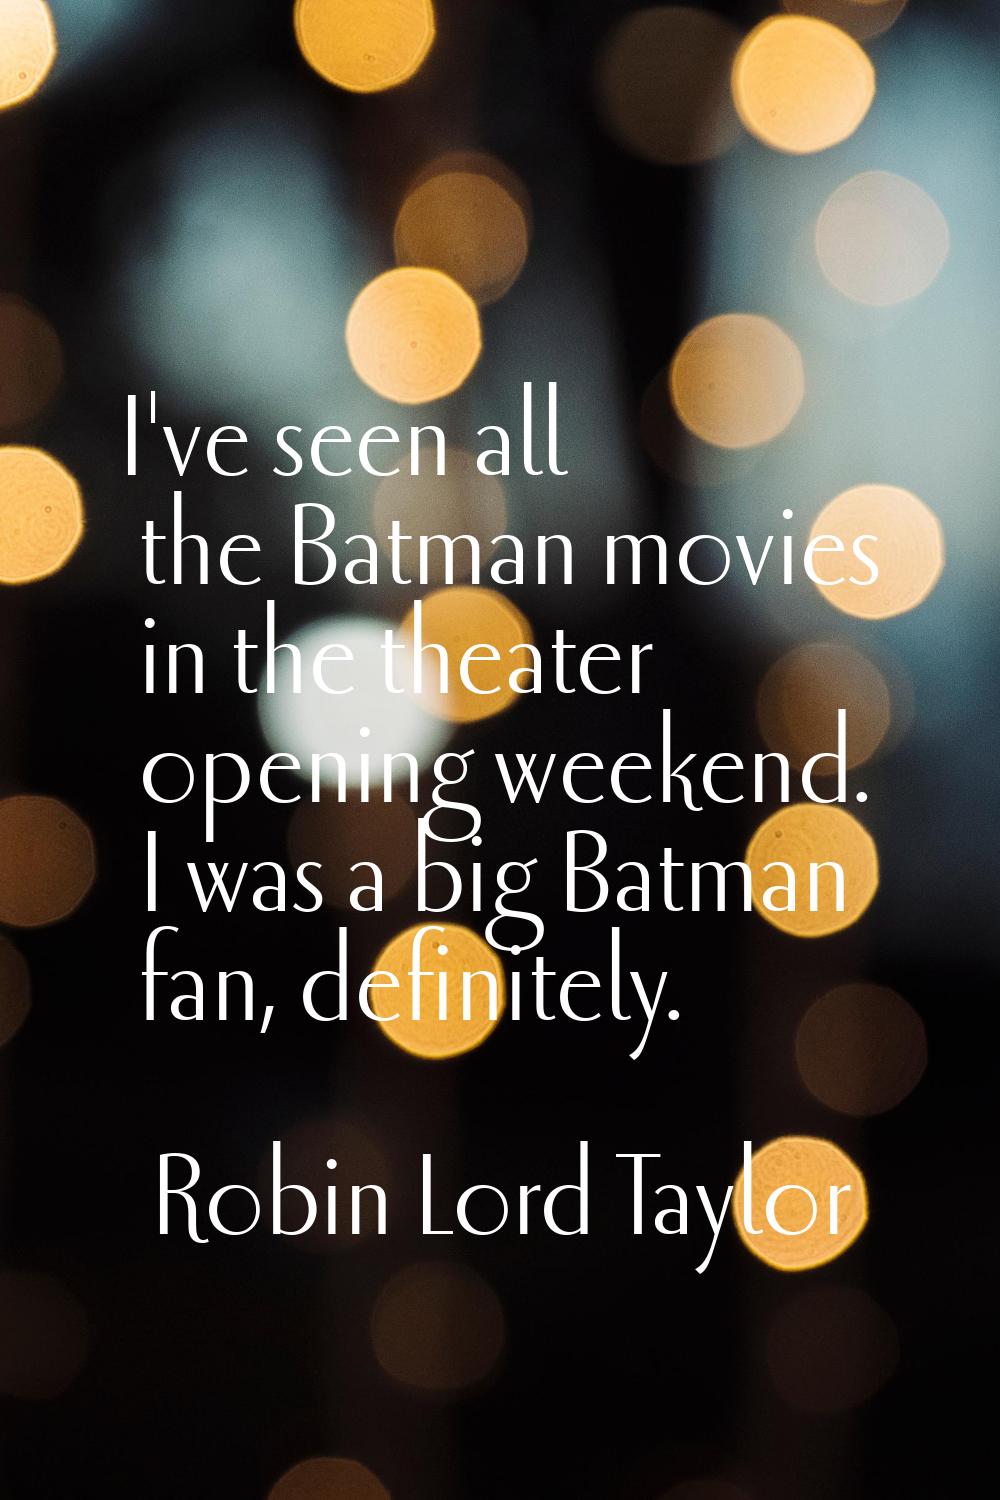 I've seen all the Batman movies in the theater opening weekend. I was a big Batman fan, definitely.